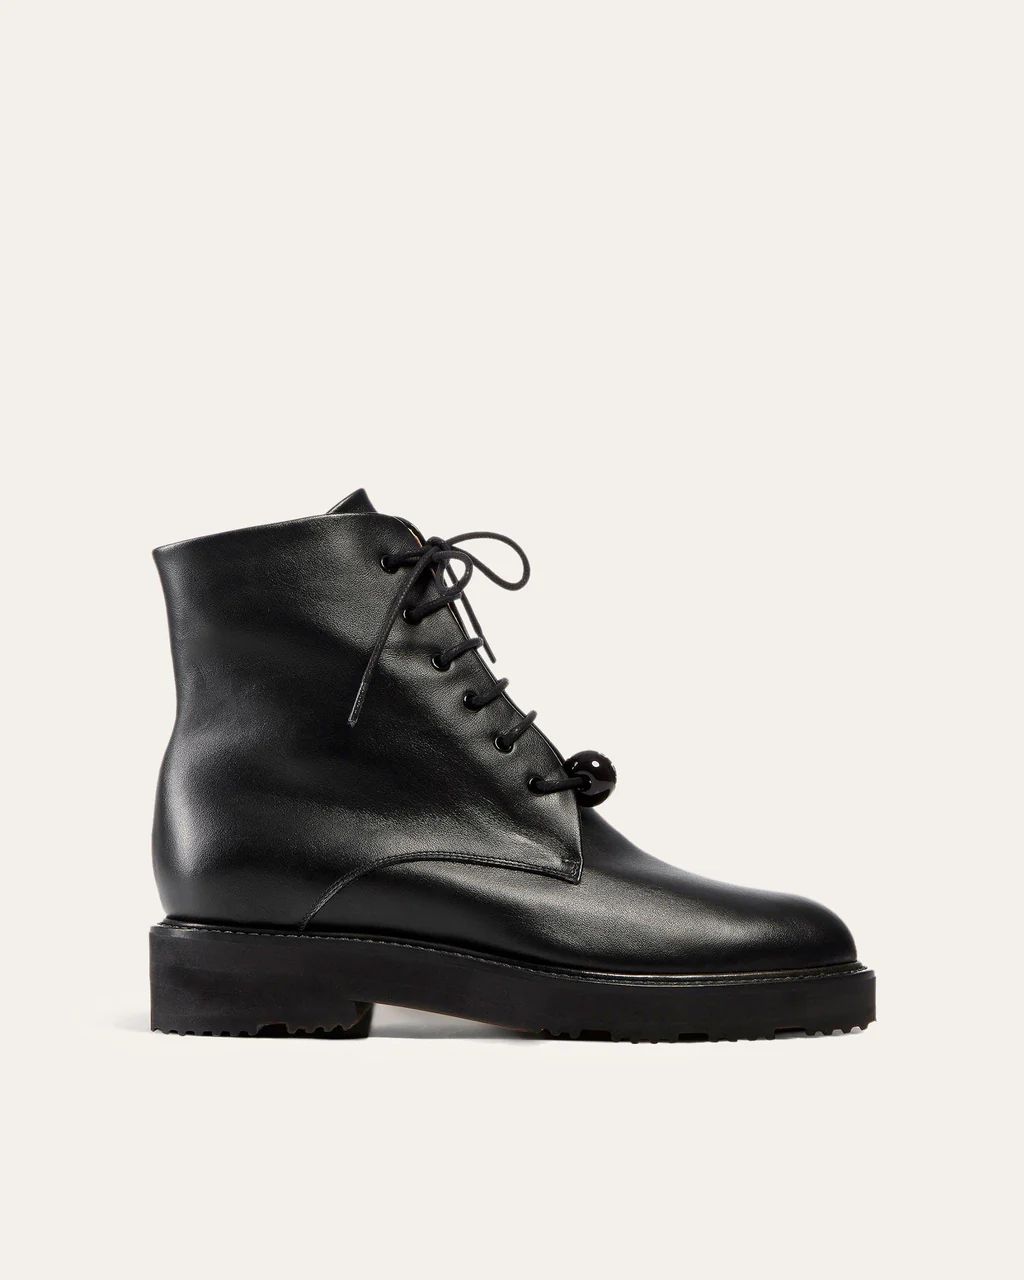 Park Boot, Black | Dear Frances